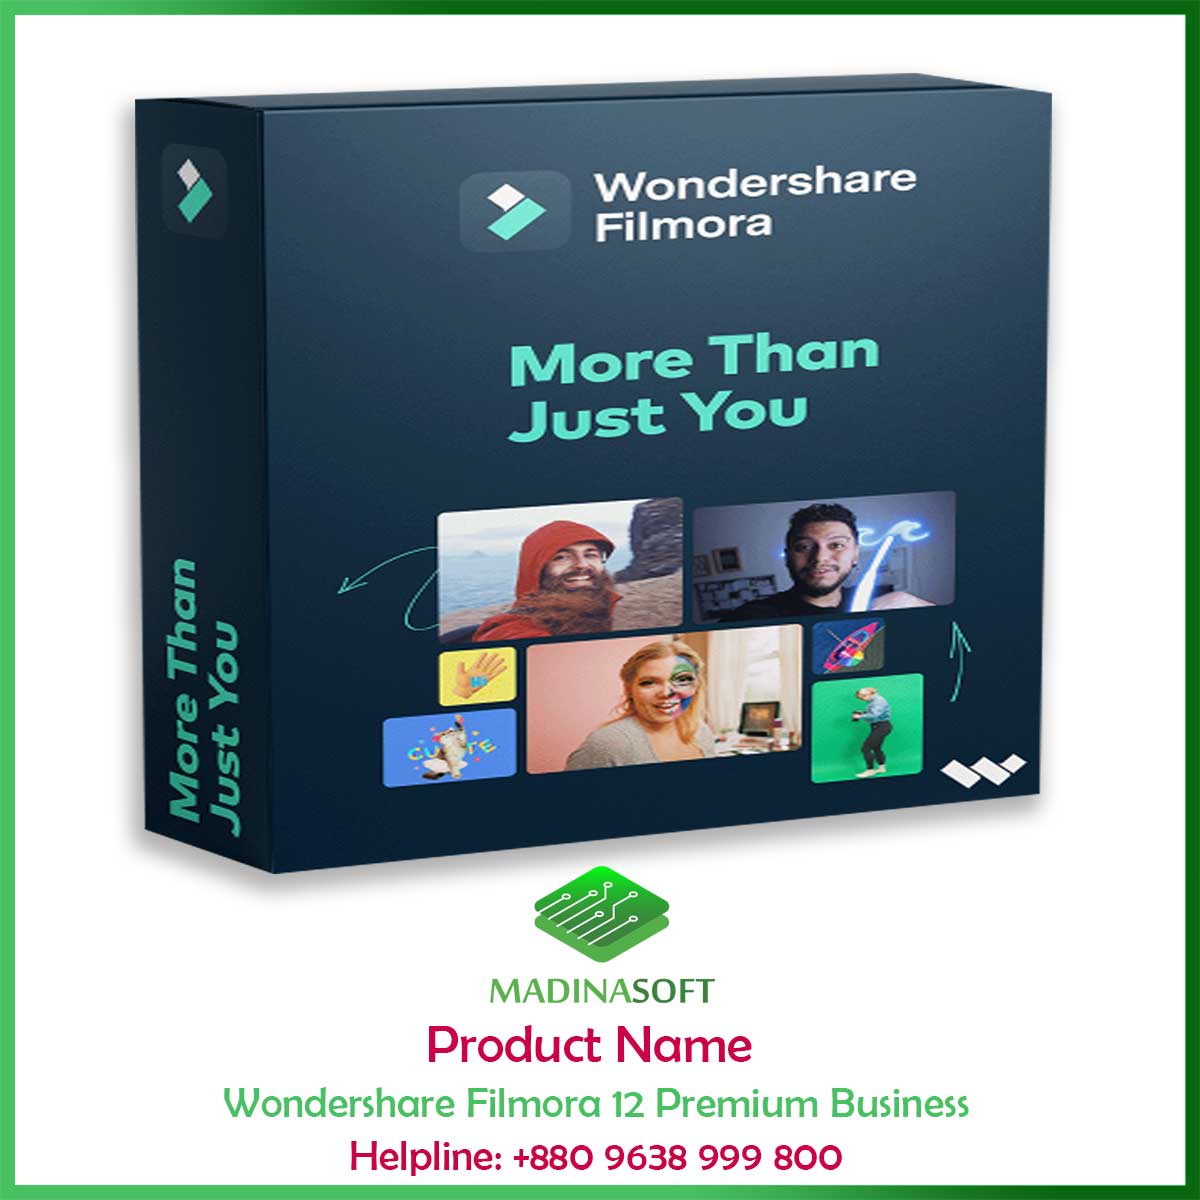 Wondershare Filmora 12 Premium Business